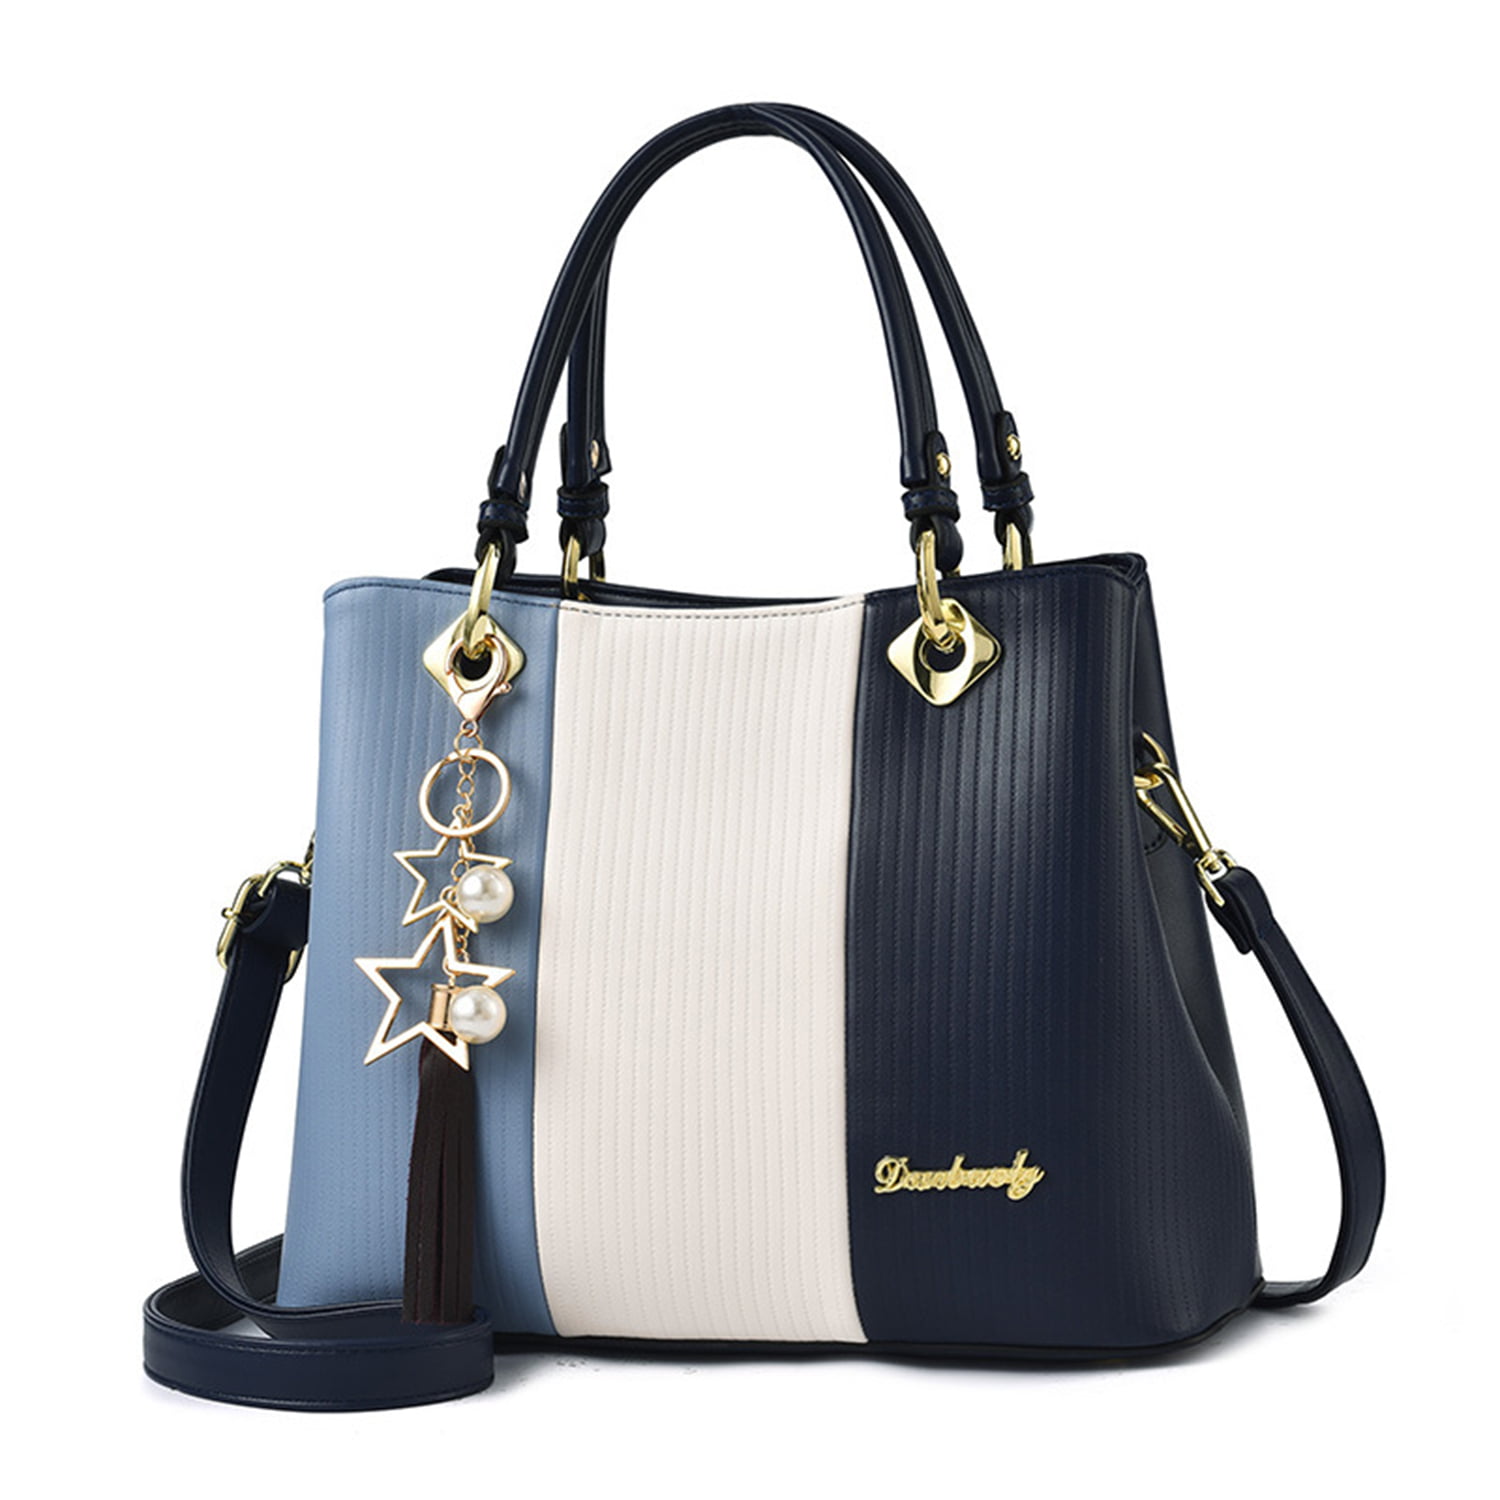  EKLART Luxury Women Messenger Bag Ladies Handbags Patent Leather  Ladies Shoulder Bag Ladies Party Bags (Color : Blue, Size : 13 * 7 * 5inch)  : Clothing, Shoes & Jewelry